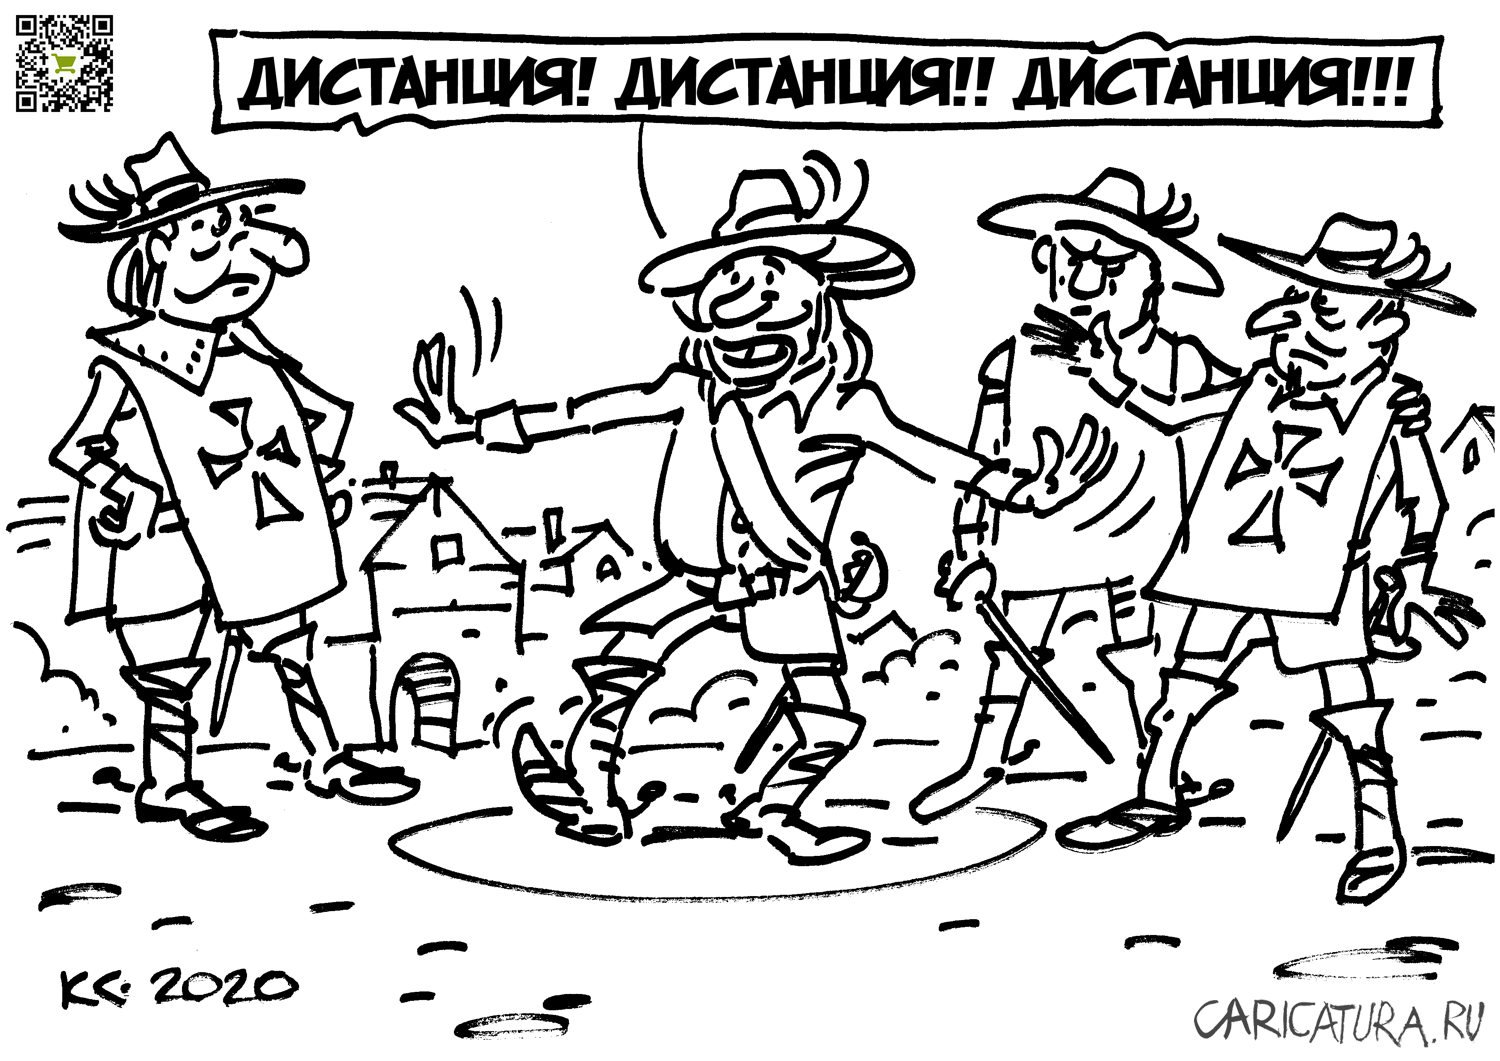 Карикатура "Песня про дистанцию", Вячеслав Капрельянц